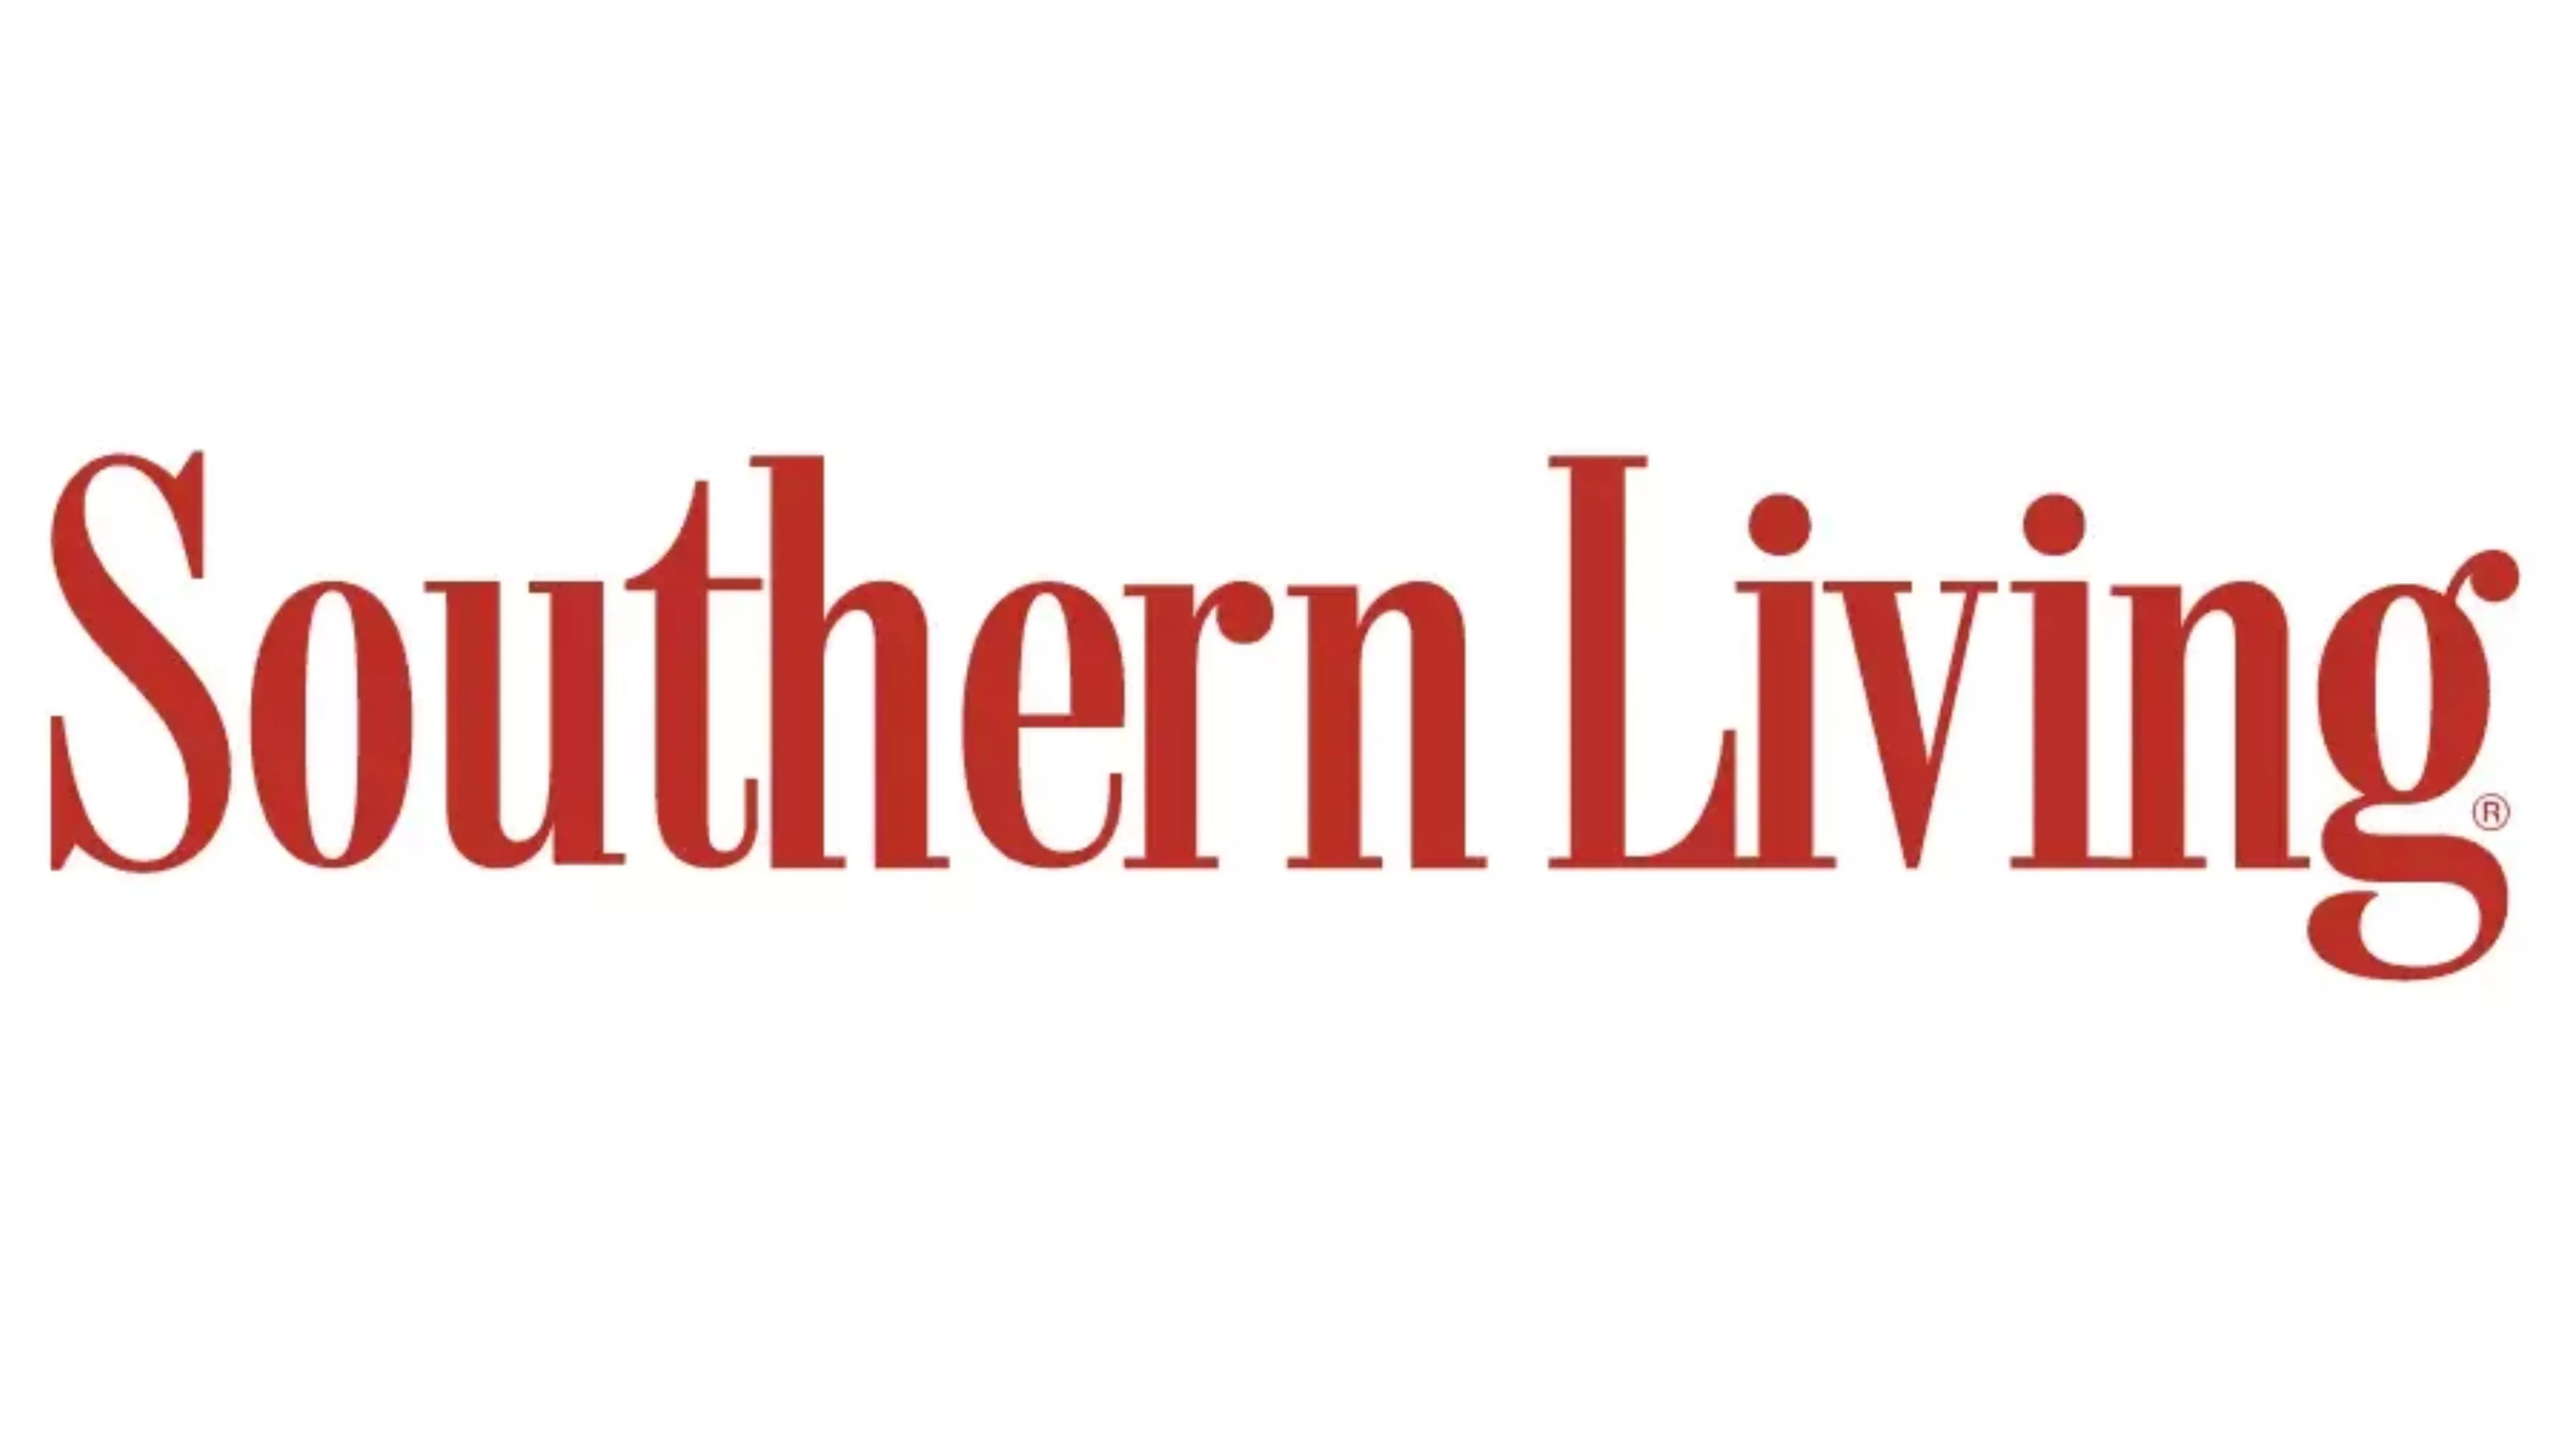 Southern living logo vector